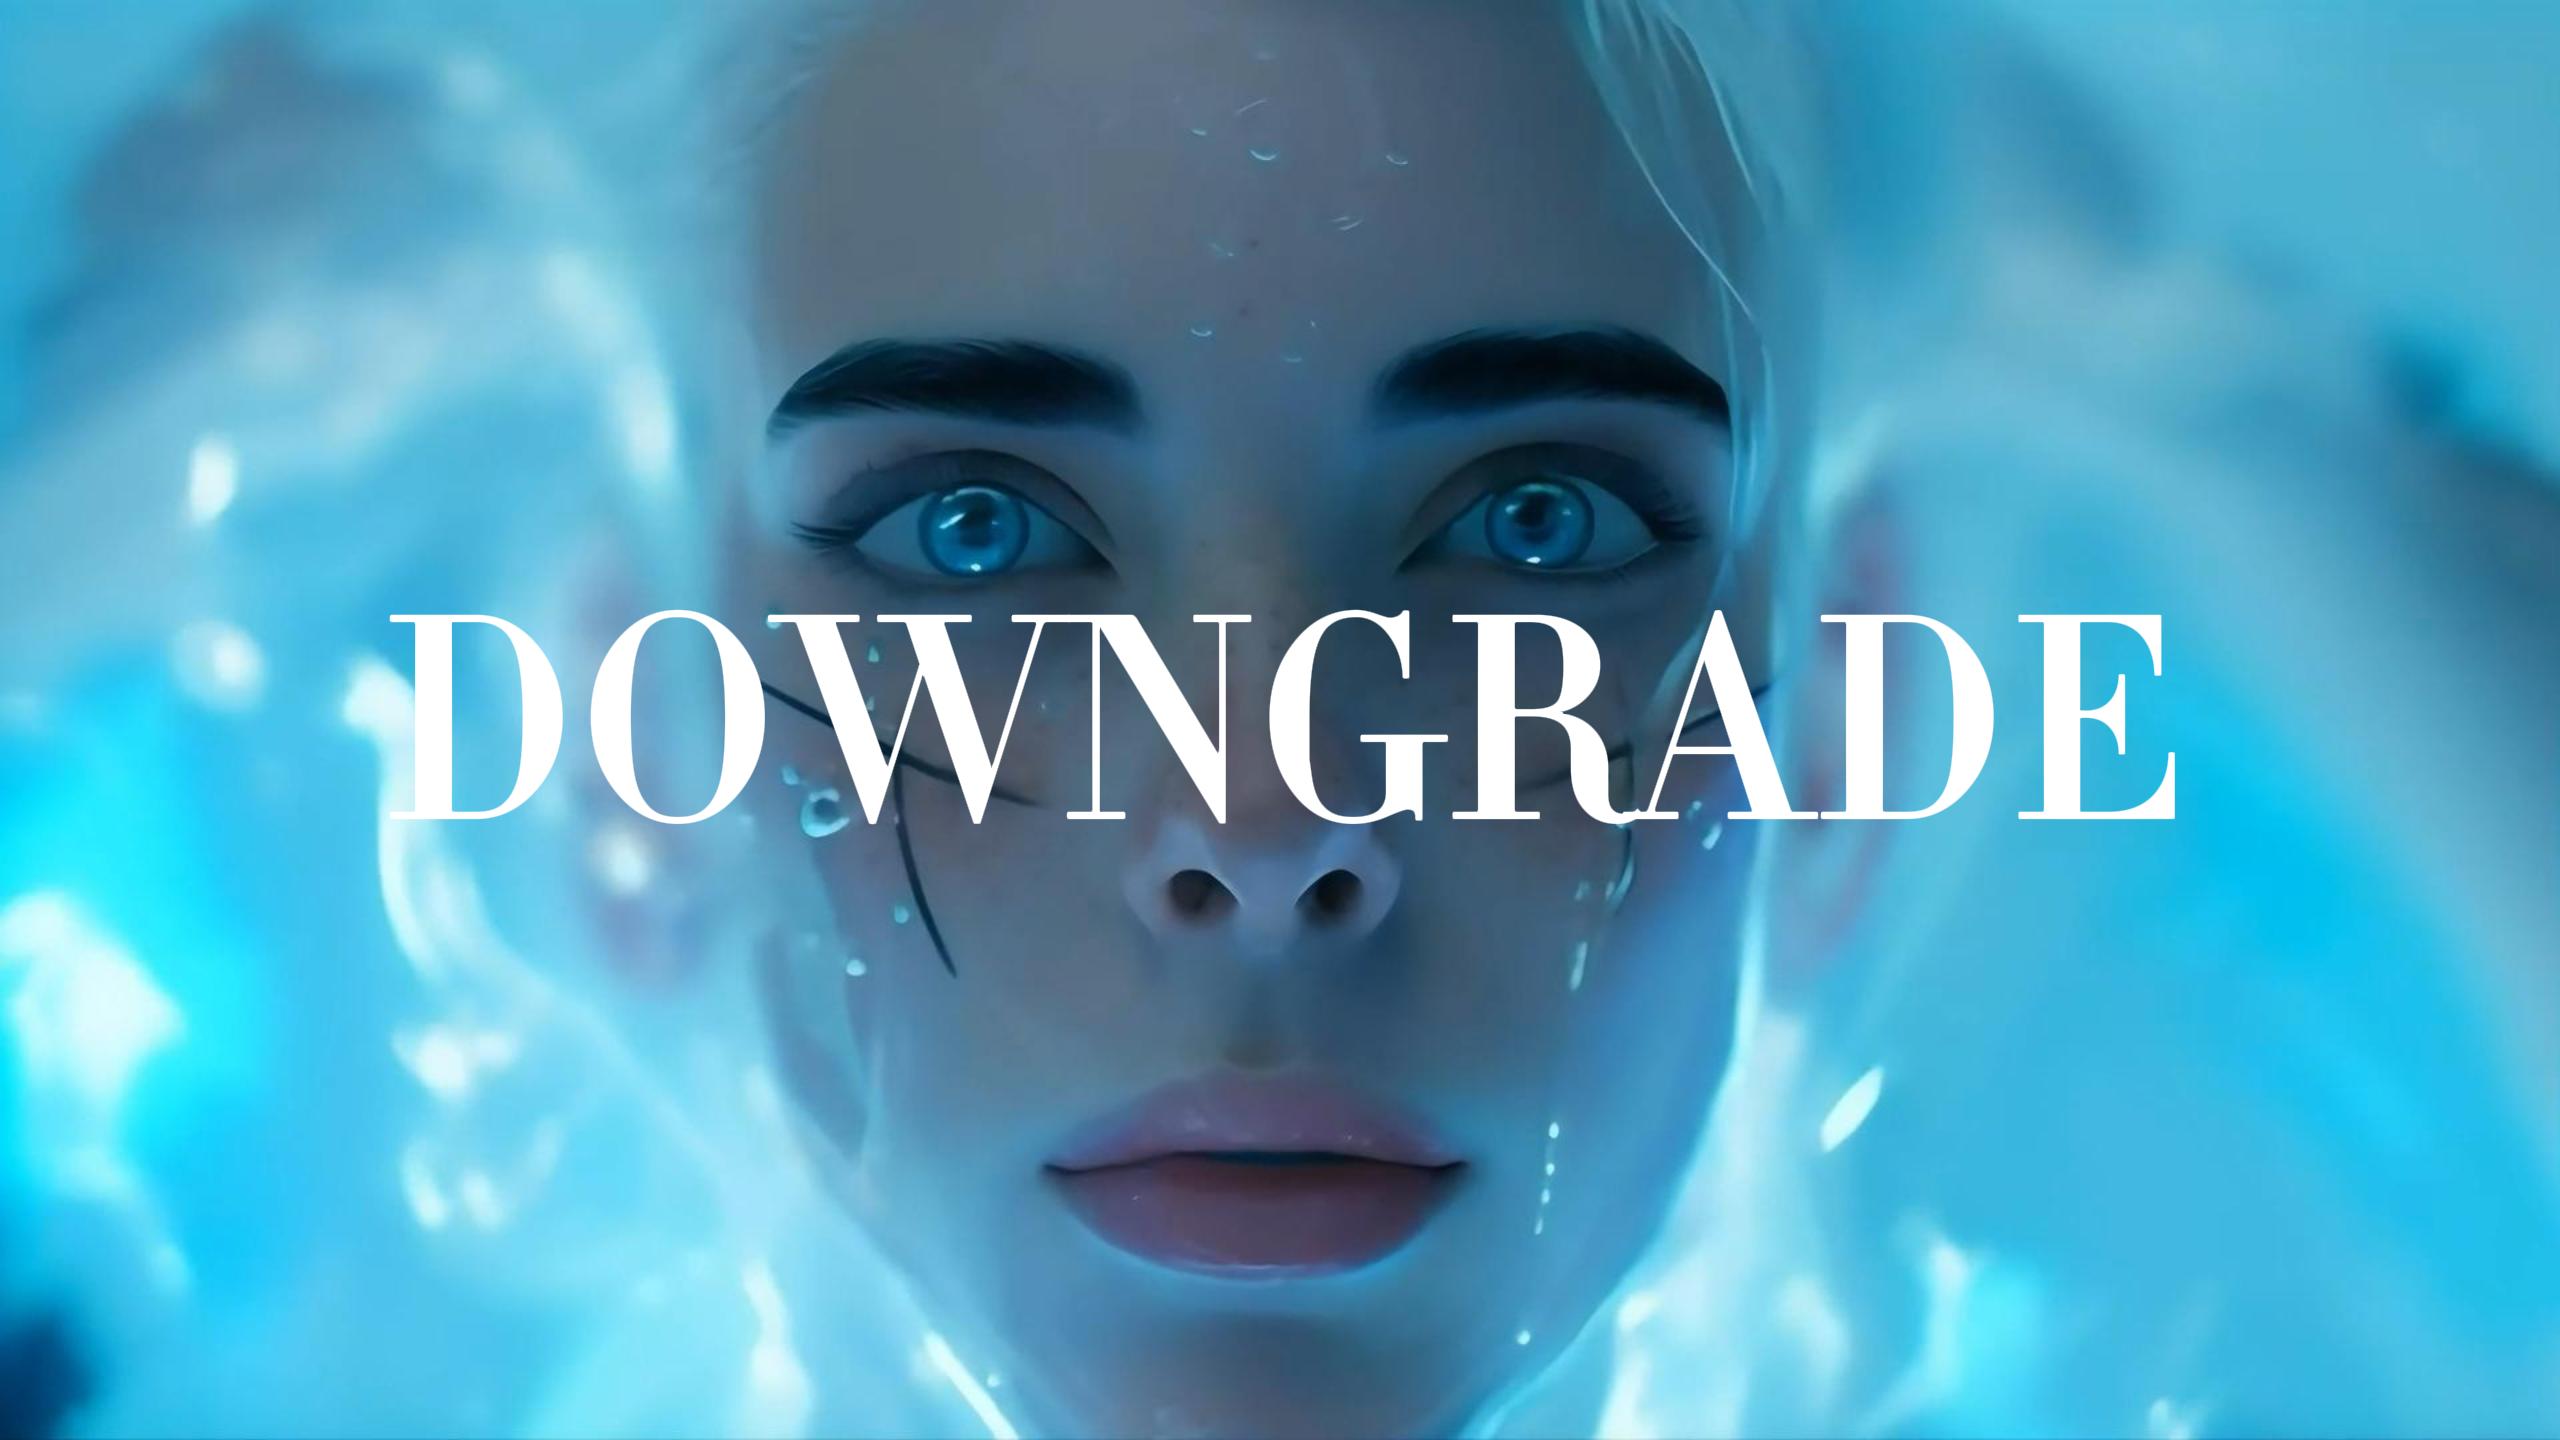 DOWNGRADE - Animation short film made with A.I.